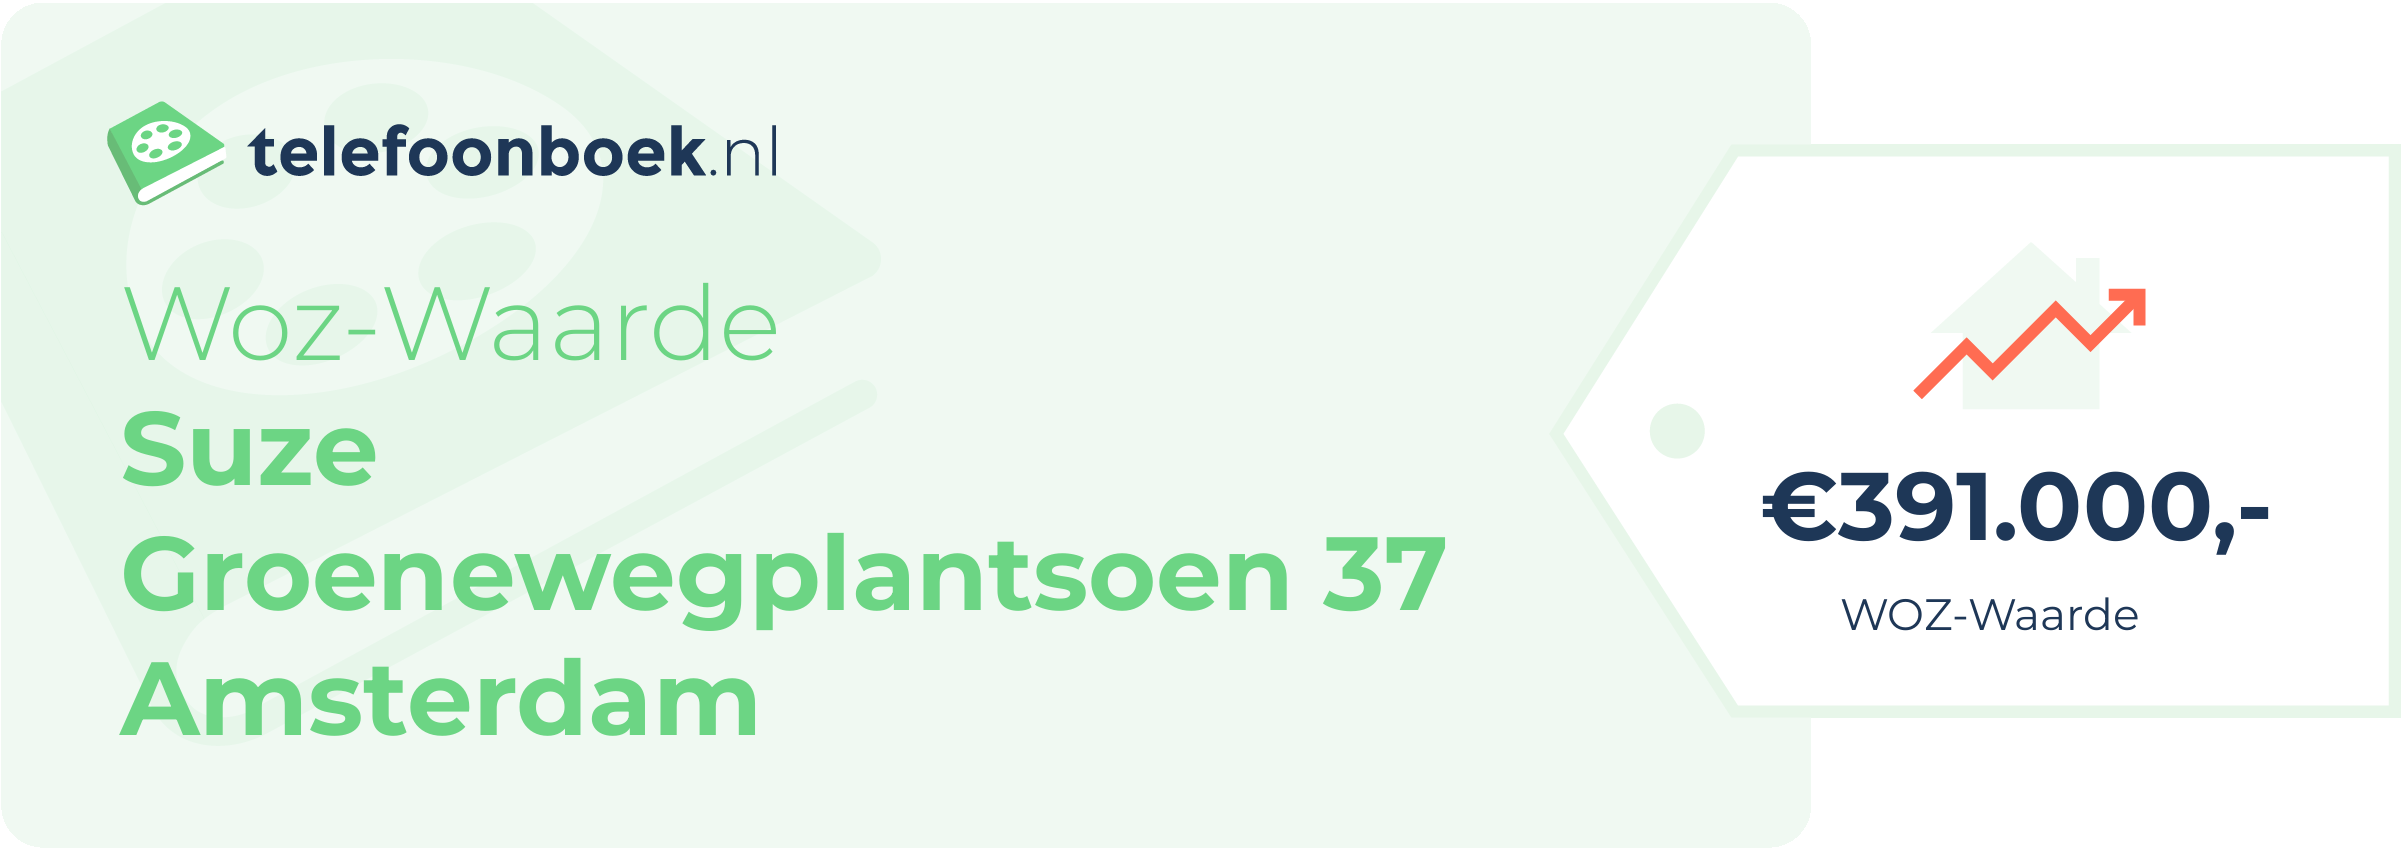 WOZ-waarde Suze Groenewegplantsoen 37 Amsterdam